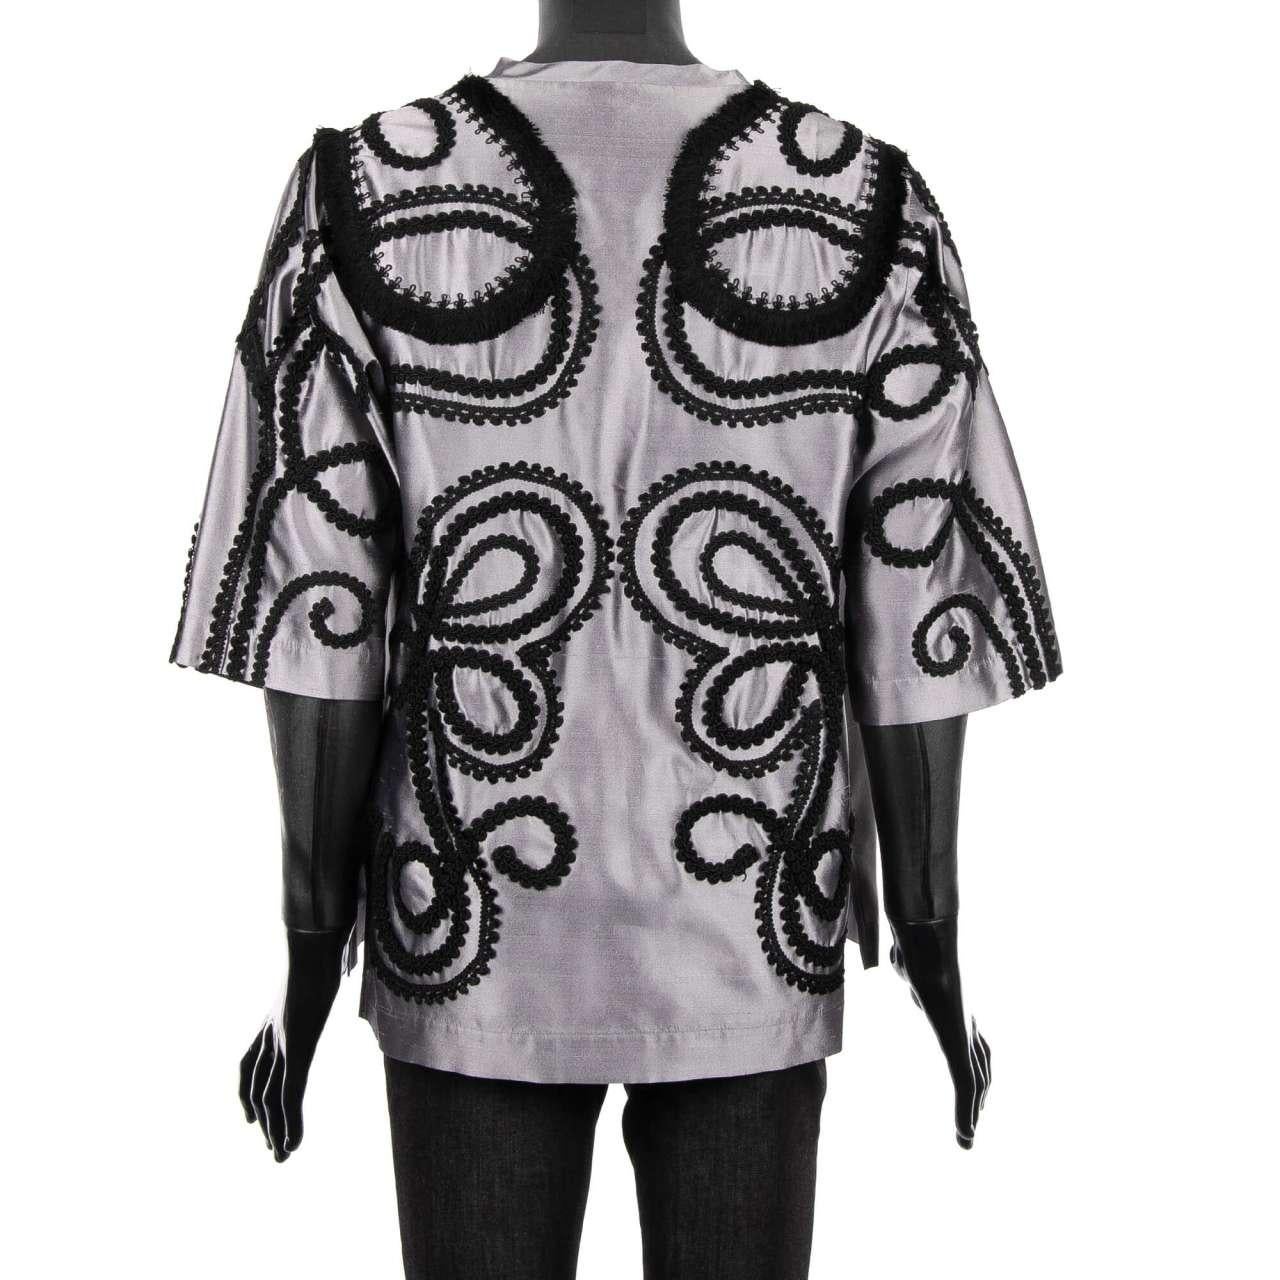 - Embroidered 1/2-sleeves spanisch torero silk shirt 